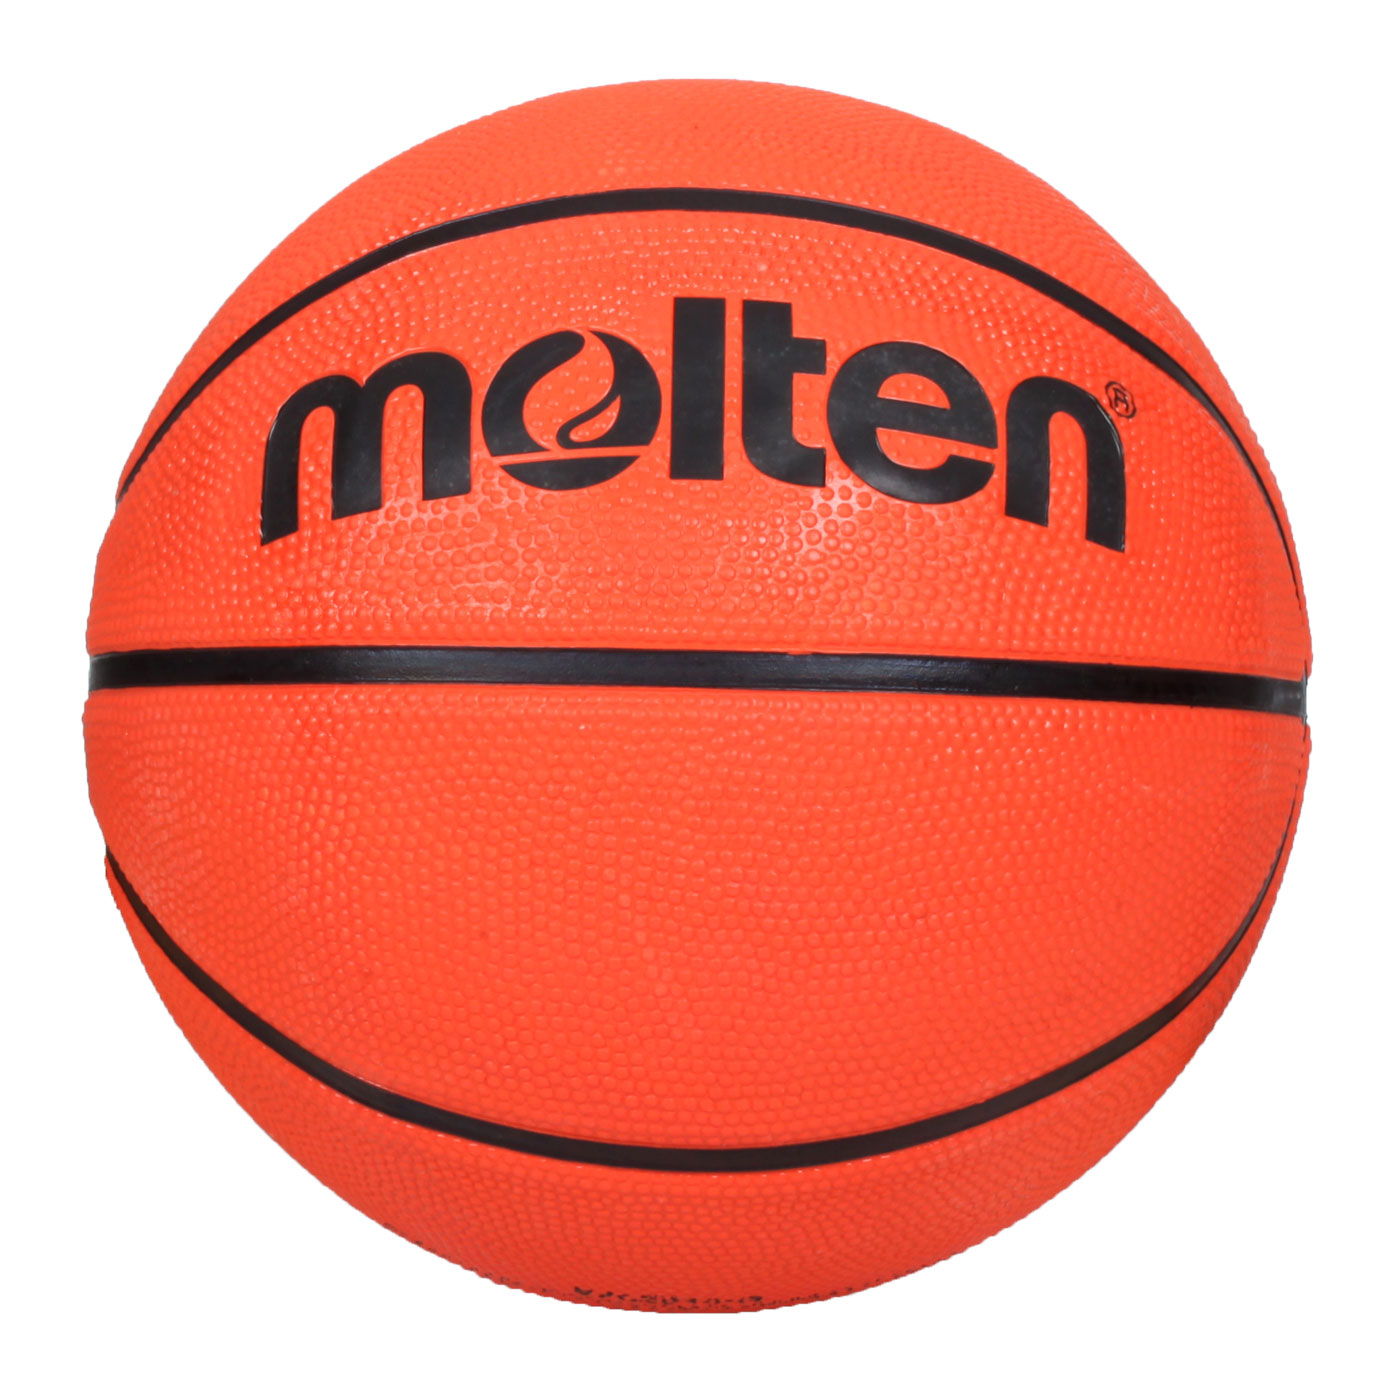 Molten 8片深溝橡膠7號籃球 B7C2010-O